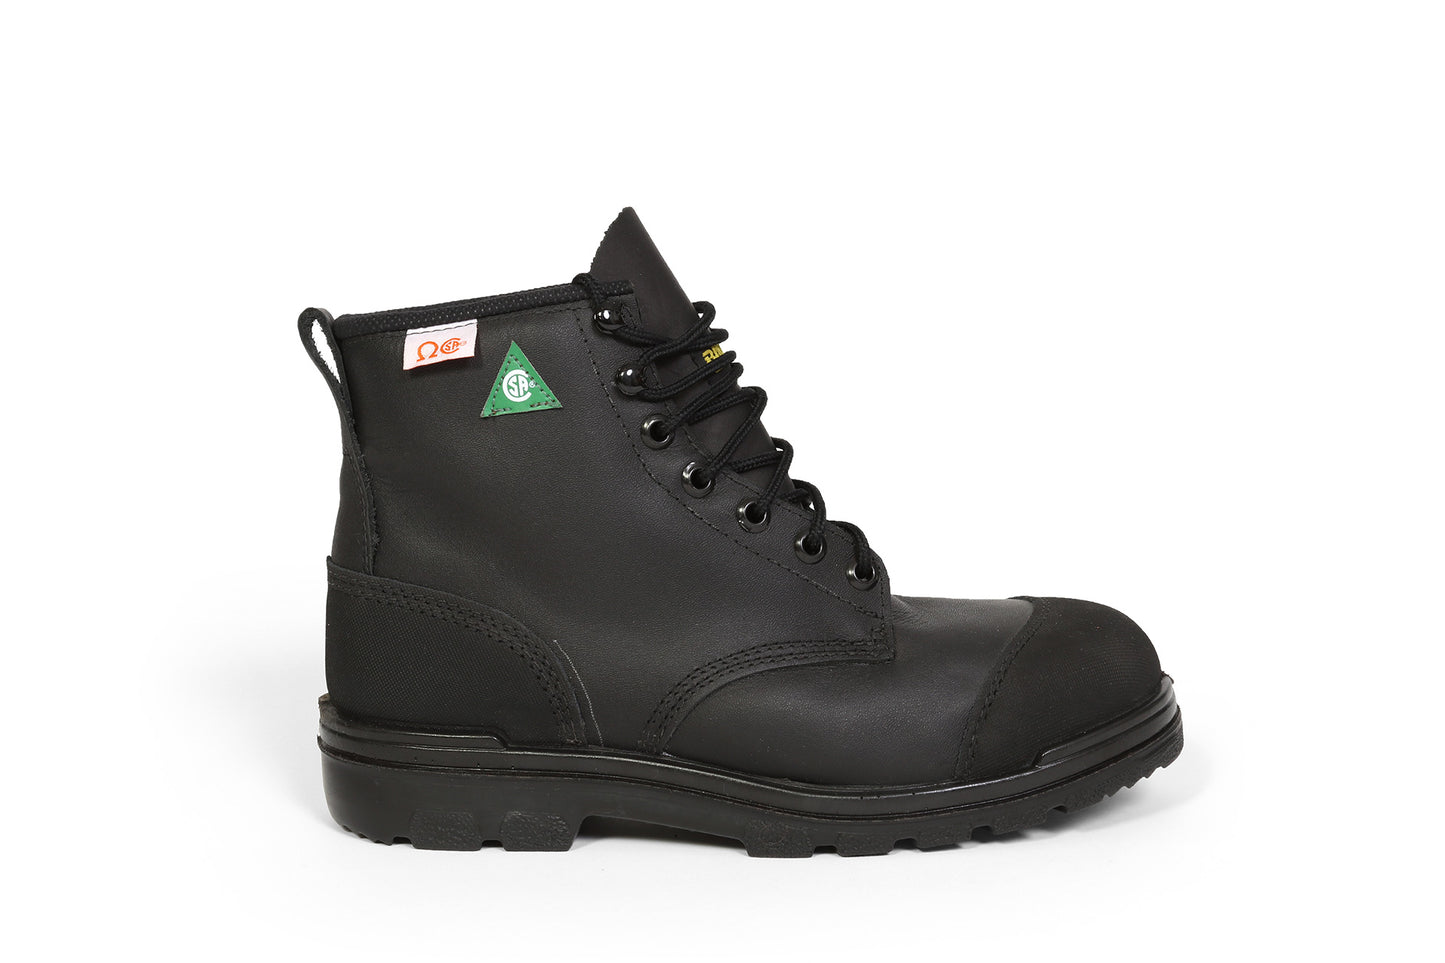 Bucks® Puritan - 6" Lace-up CSA Steel-toe Work Boot